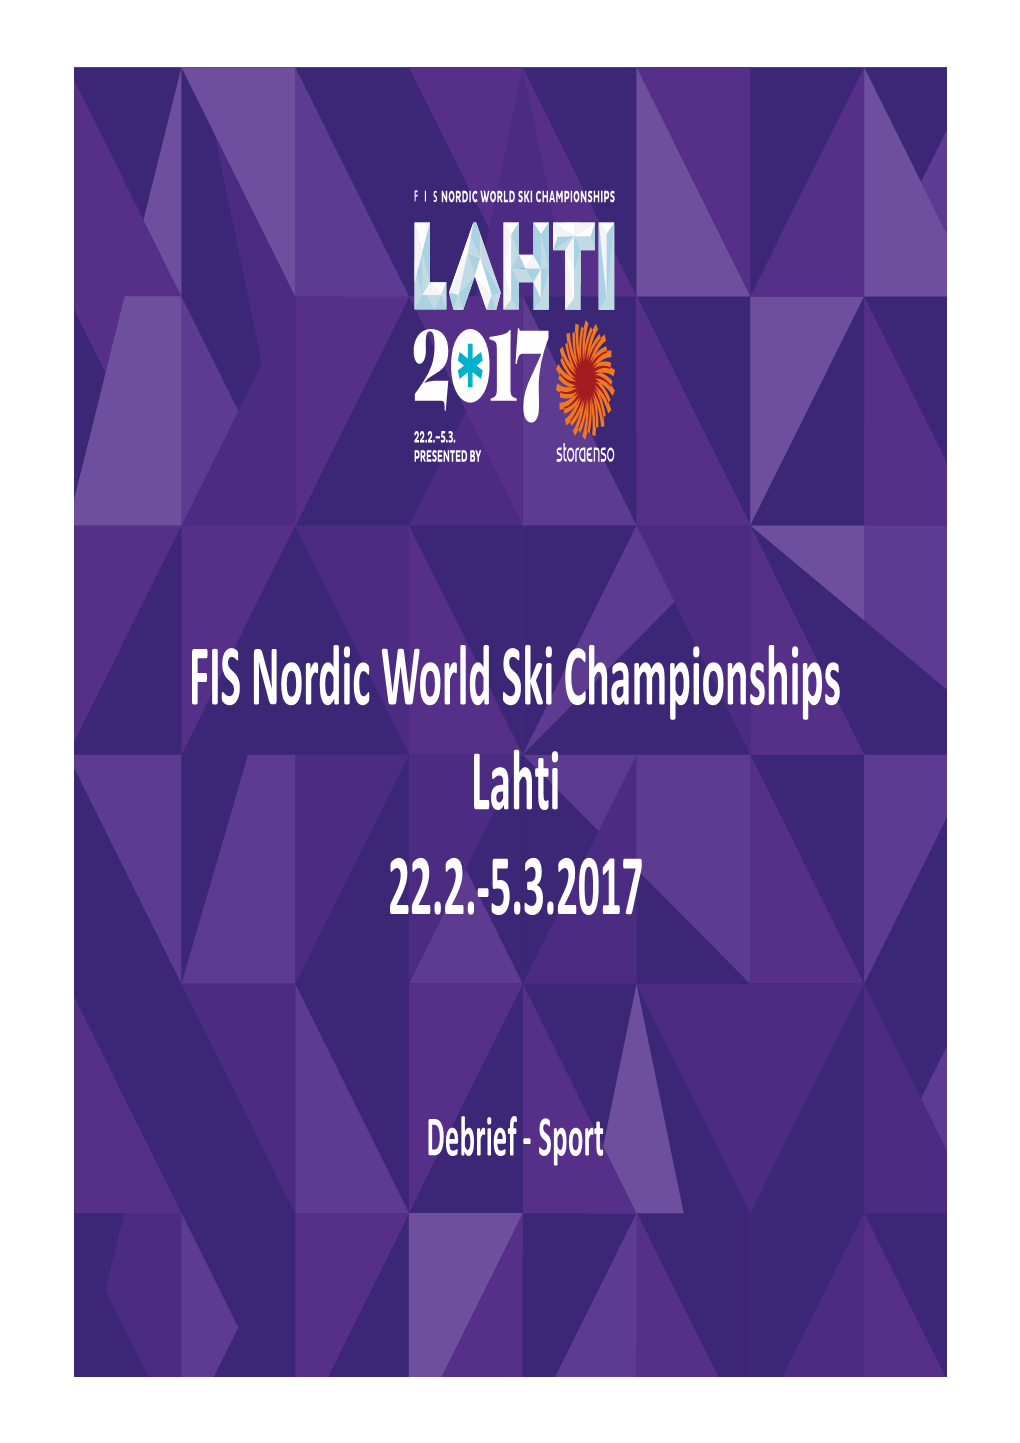 Lahti 2017 Local Honorary Organization Committee Board